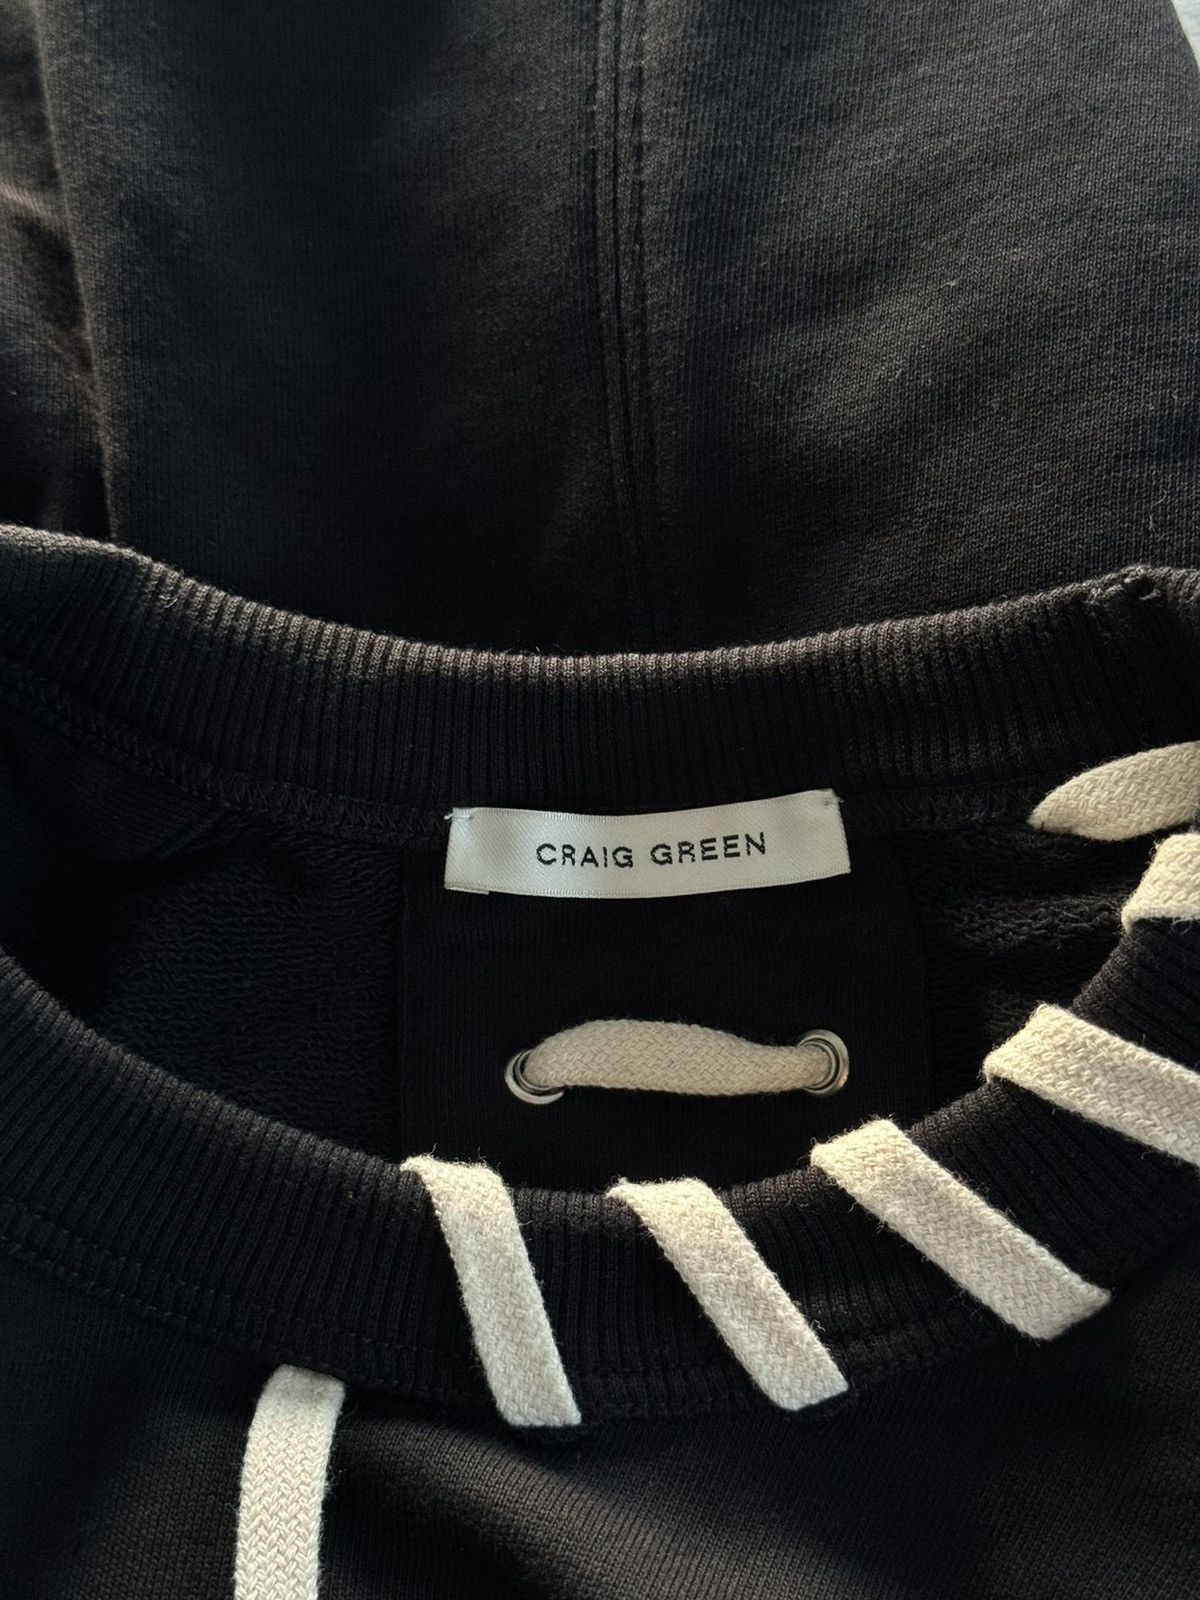 Craig Green Black Laced Sweatshirt FW21 XL Size US XL / EU 56 / 4 - 6 Thumbnail